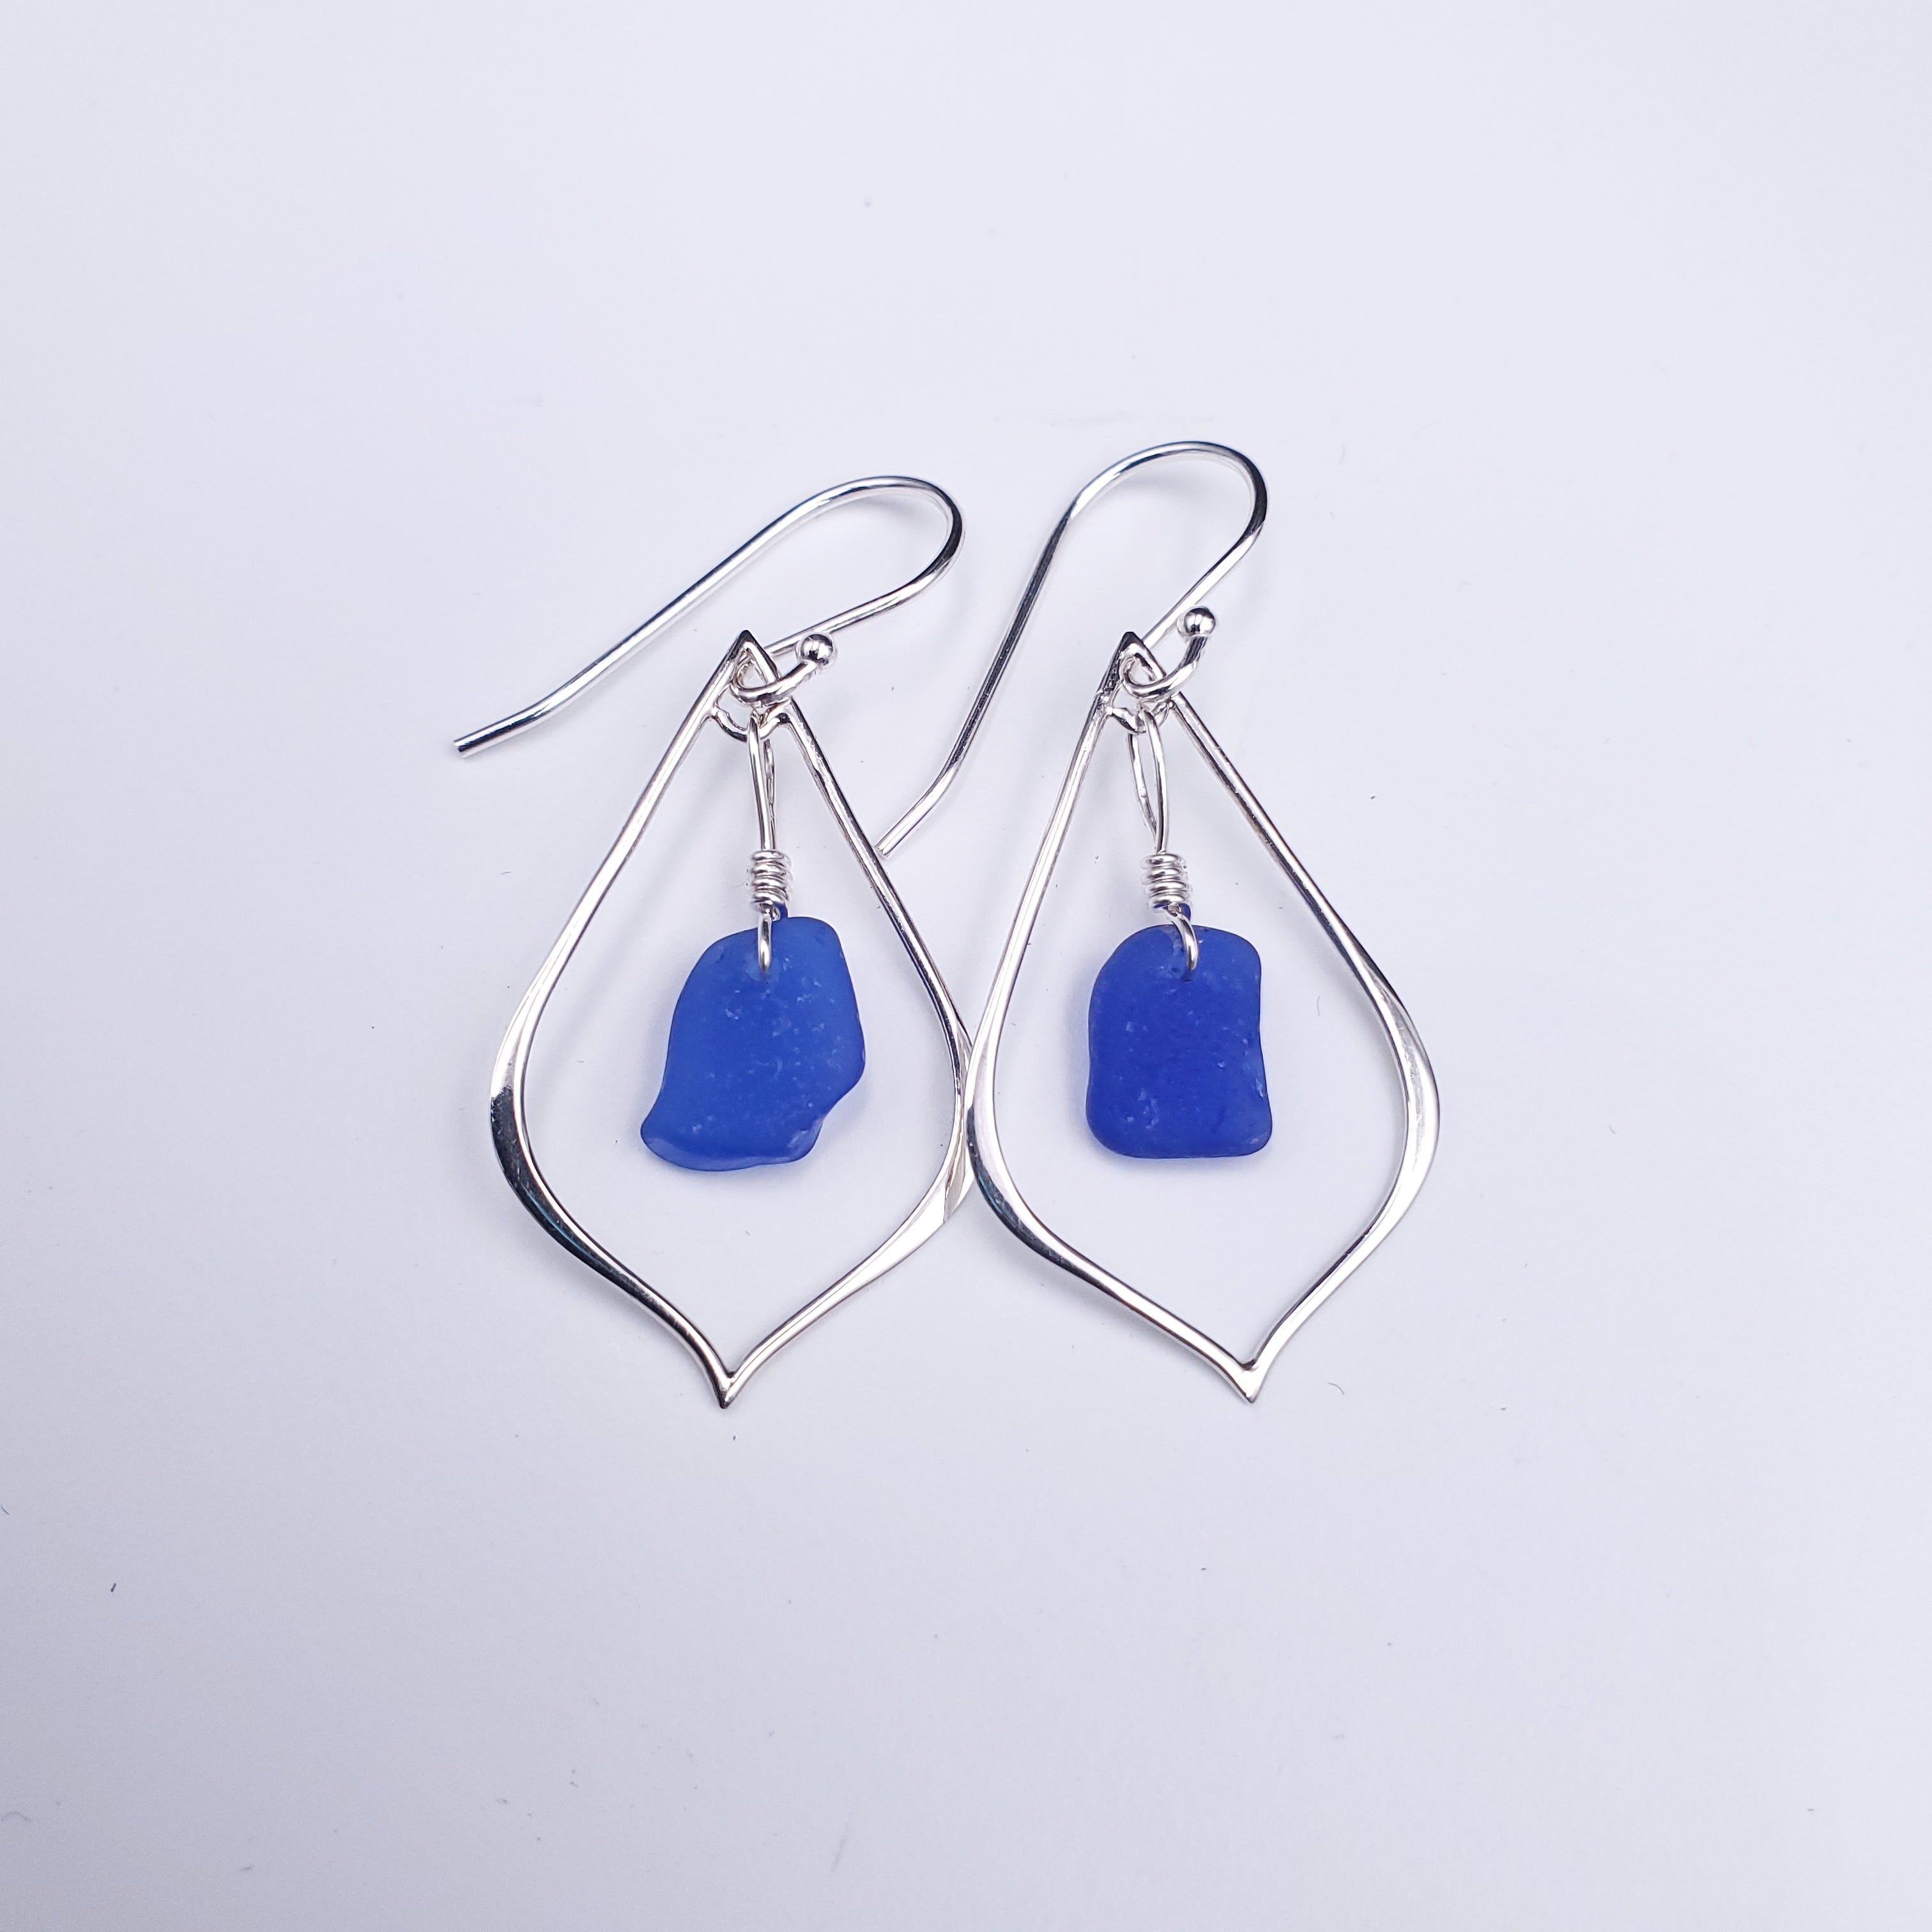 Medium pointed teardrop earrings with sea glass